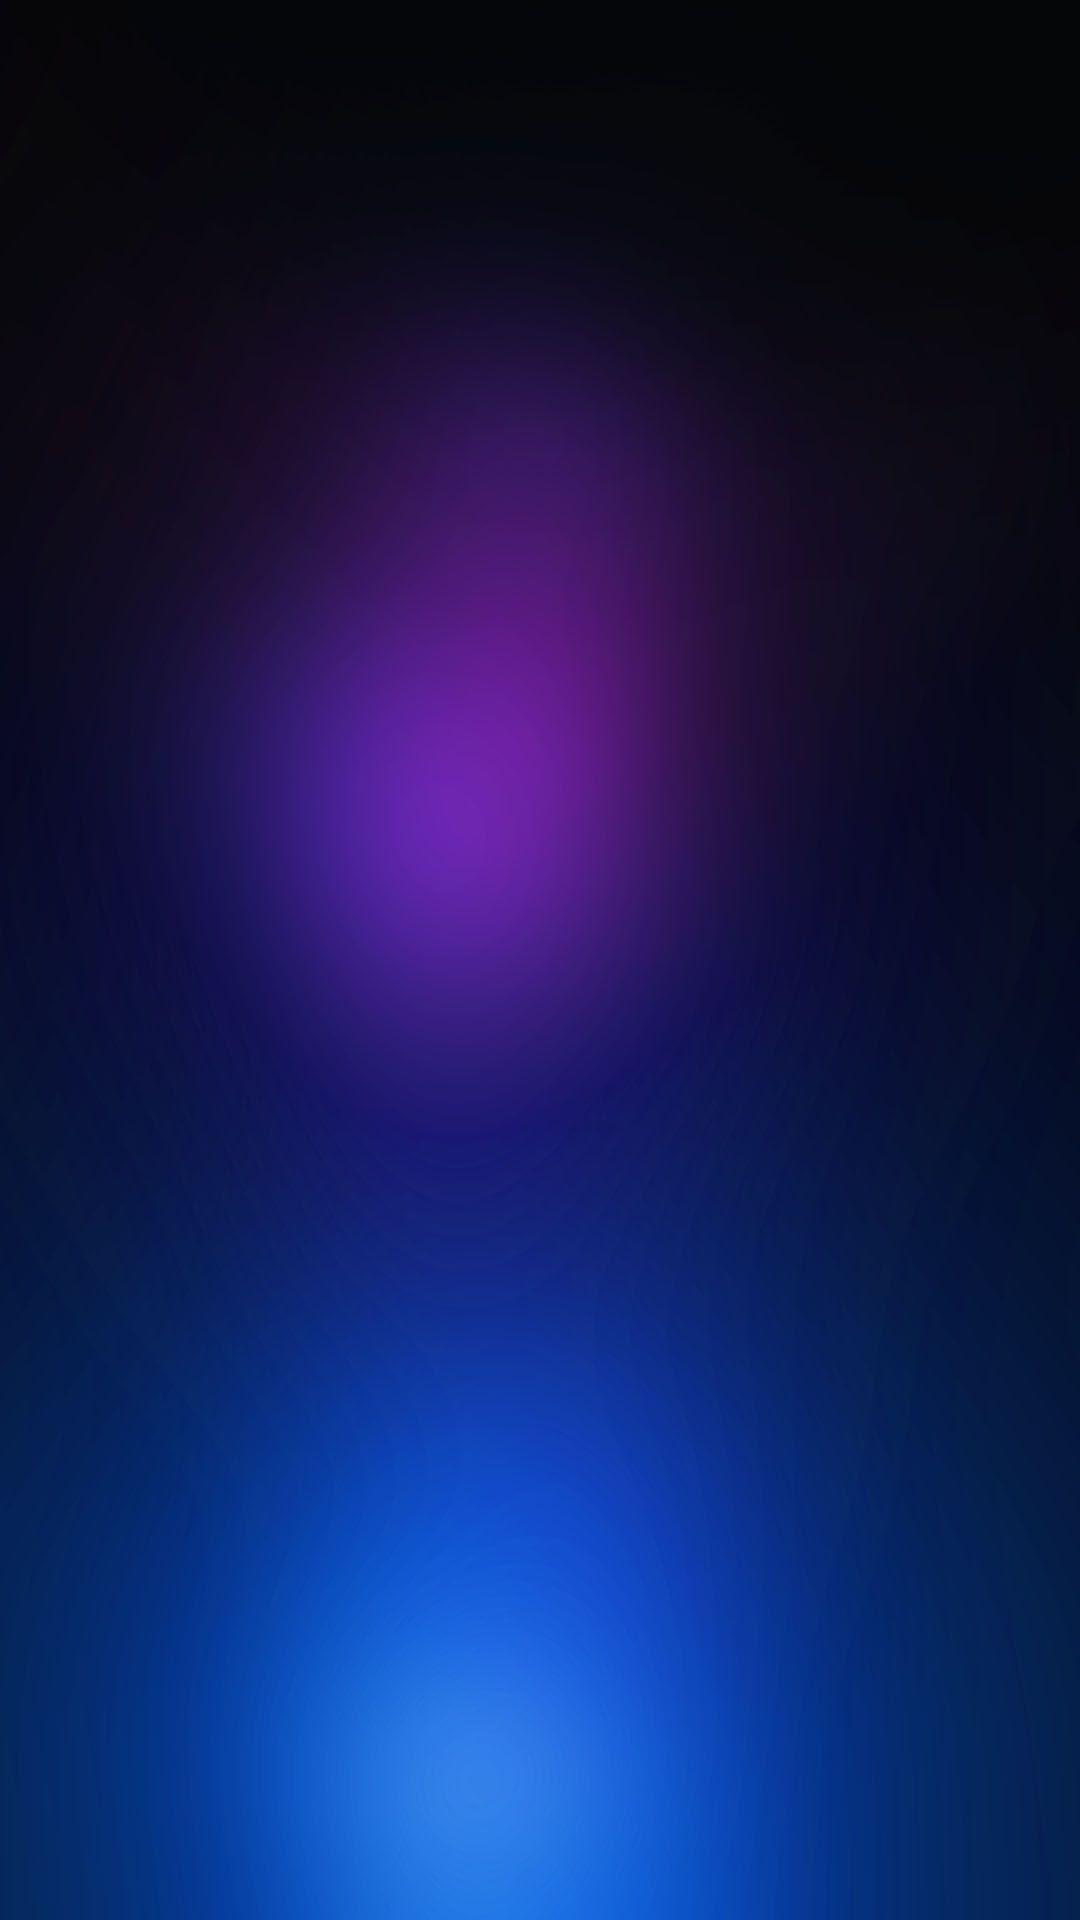 Tải xuống miễn phí 1080x1920 Purple Blue Gradient Samsung Android Wallpaper